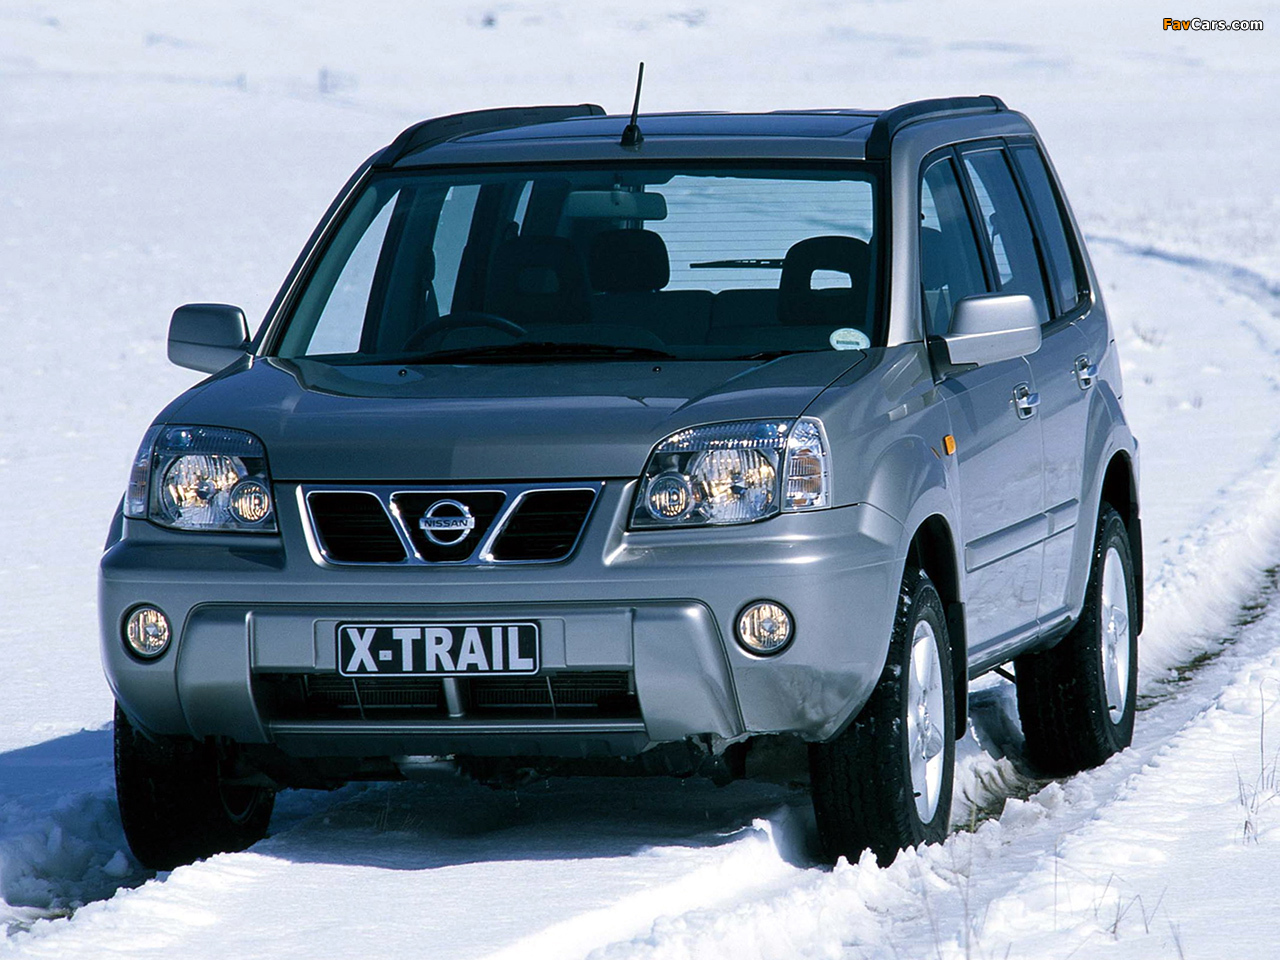 X trail 2001 год. Ниссан х-Трейл т30. Nissan x-Trail 2001. Nissan x-Trail i t30. Ниссан Икс Трейл т30.